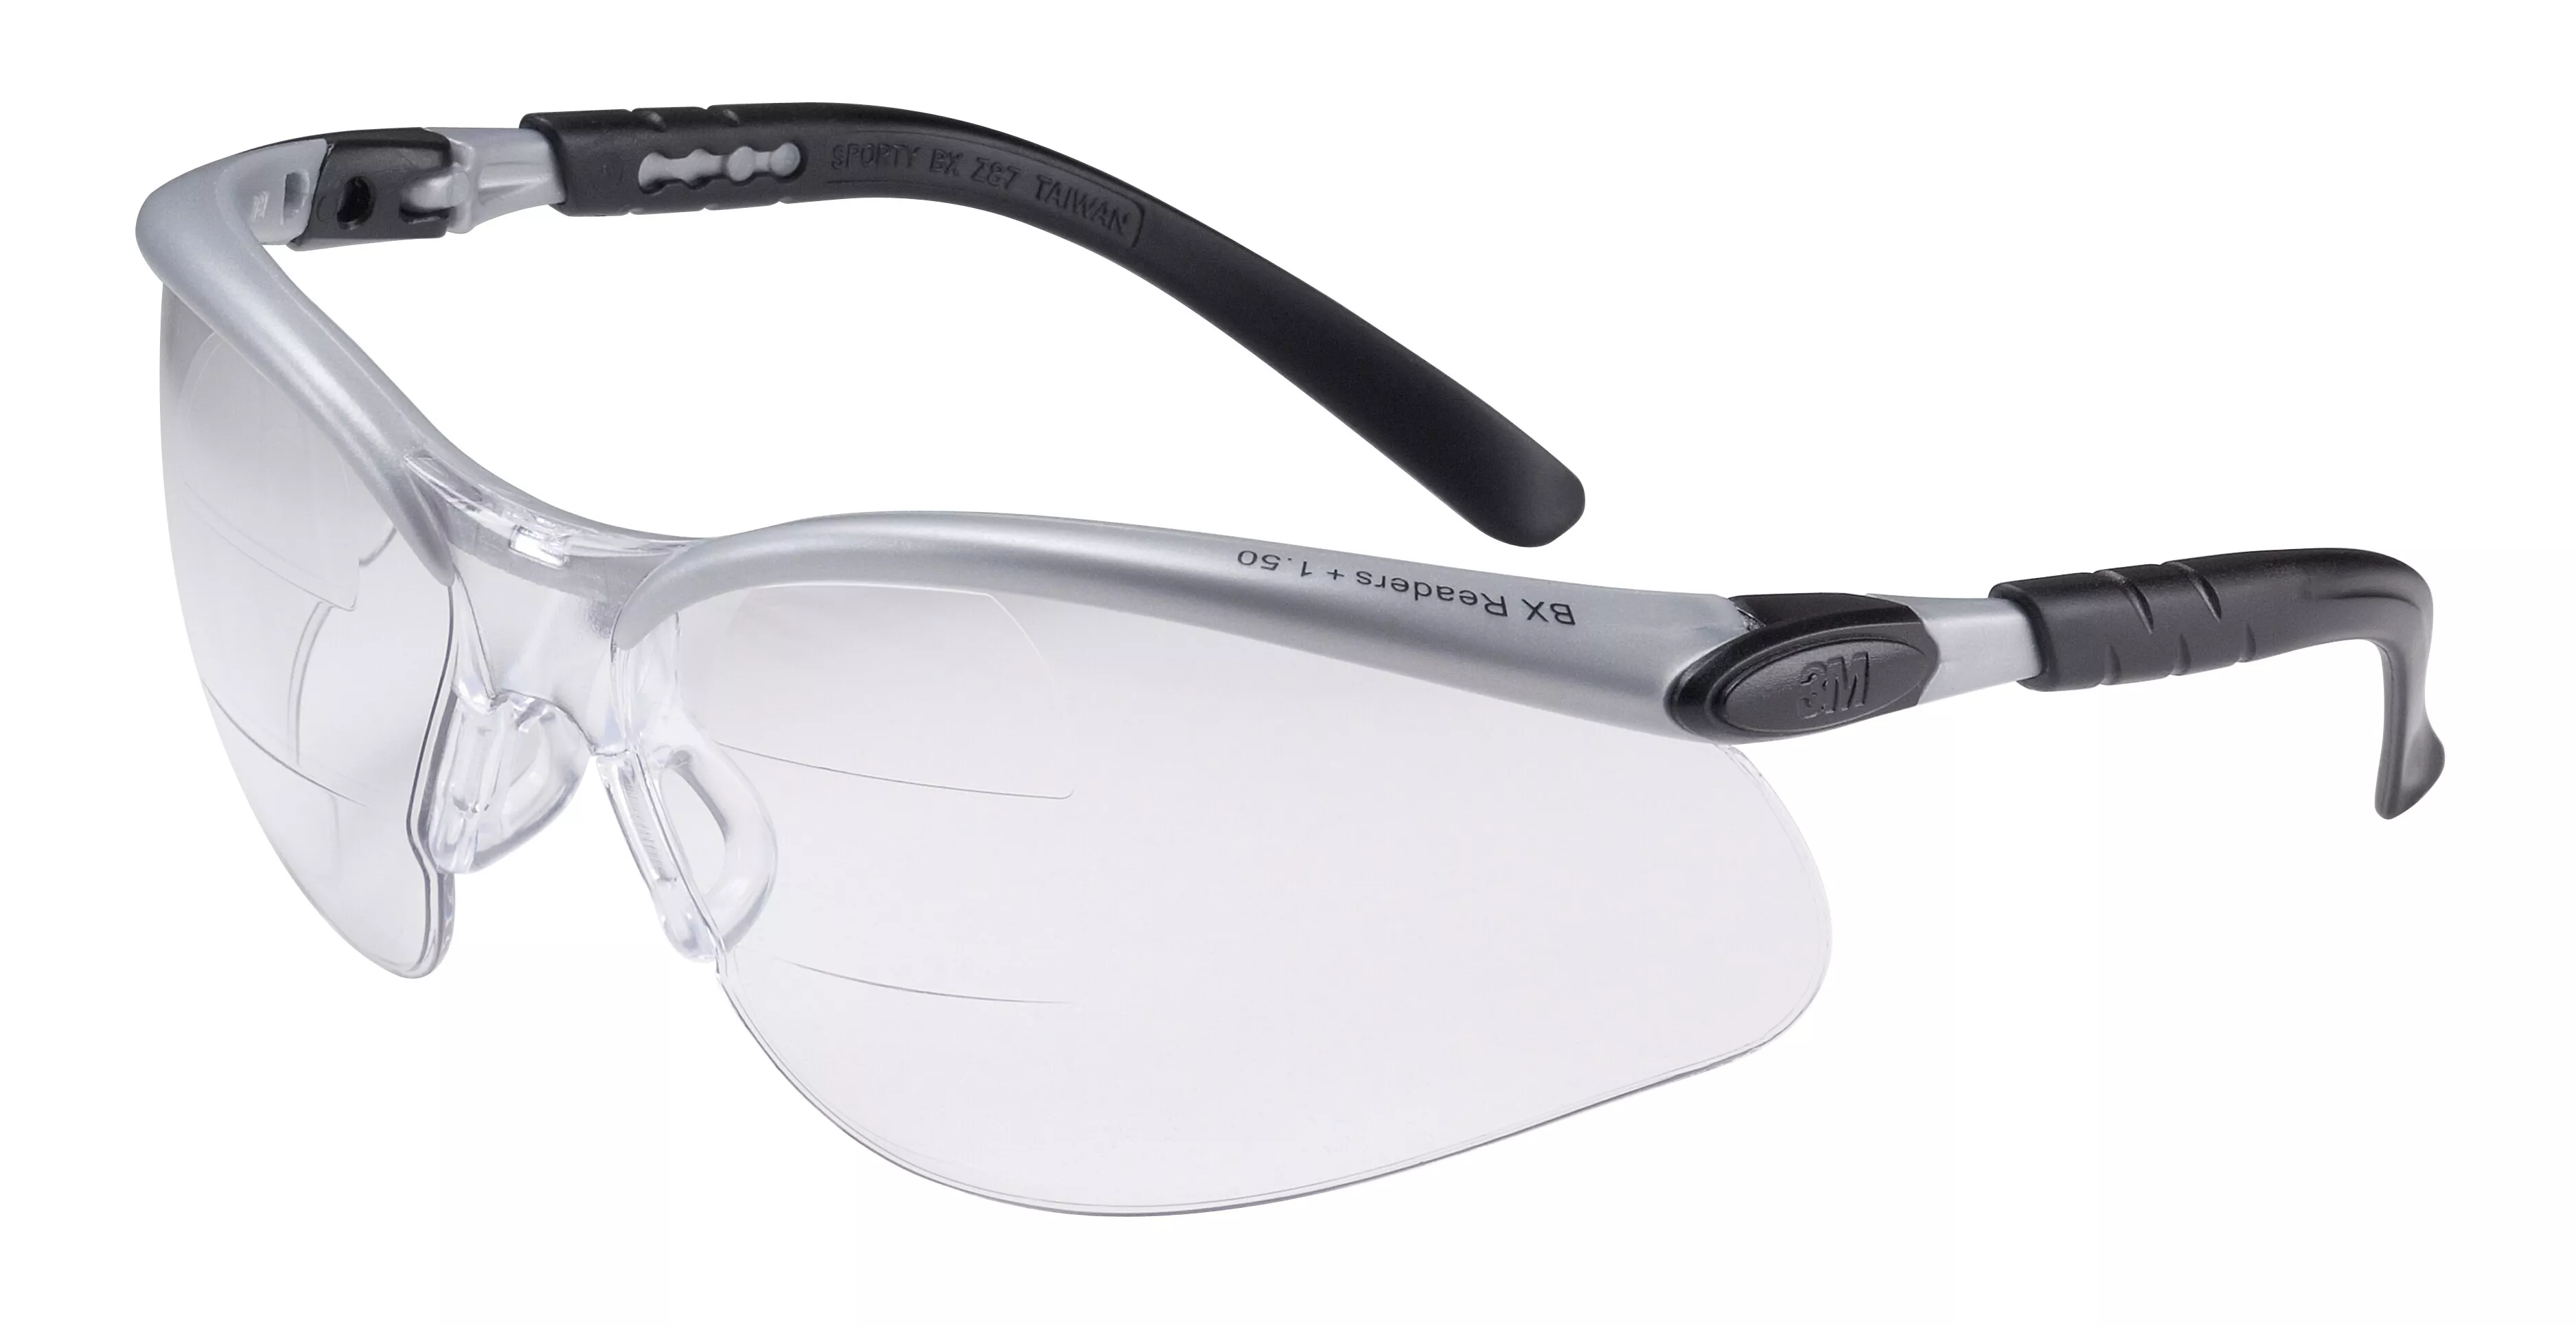 3M™ BX™ Dual Reader Protective Eyewear 11457-00000-20, Clear Anti-Fog
Lens, Silver/Black Frame, +1.5 Top/Bottom Diopter. 20 ea/Case